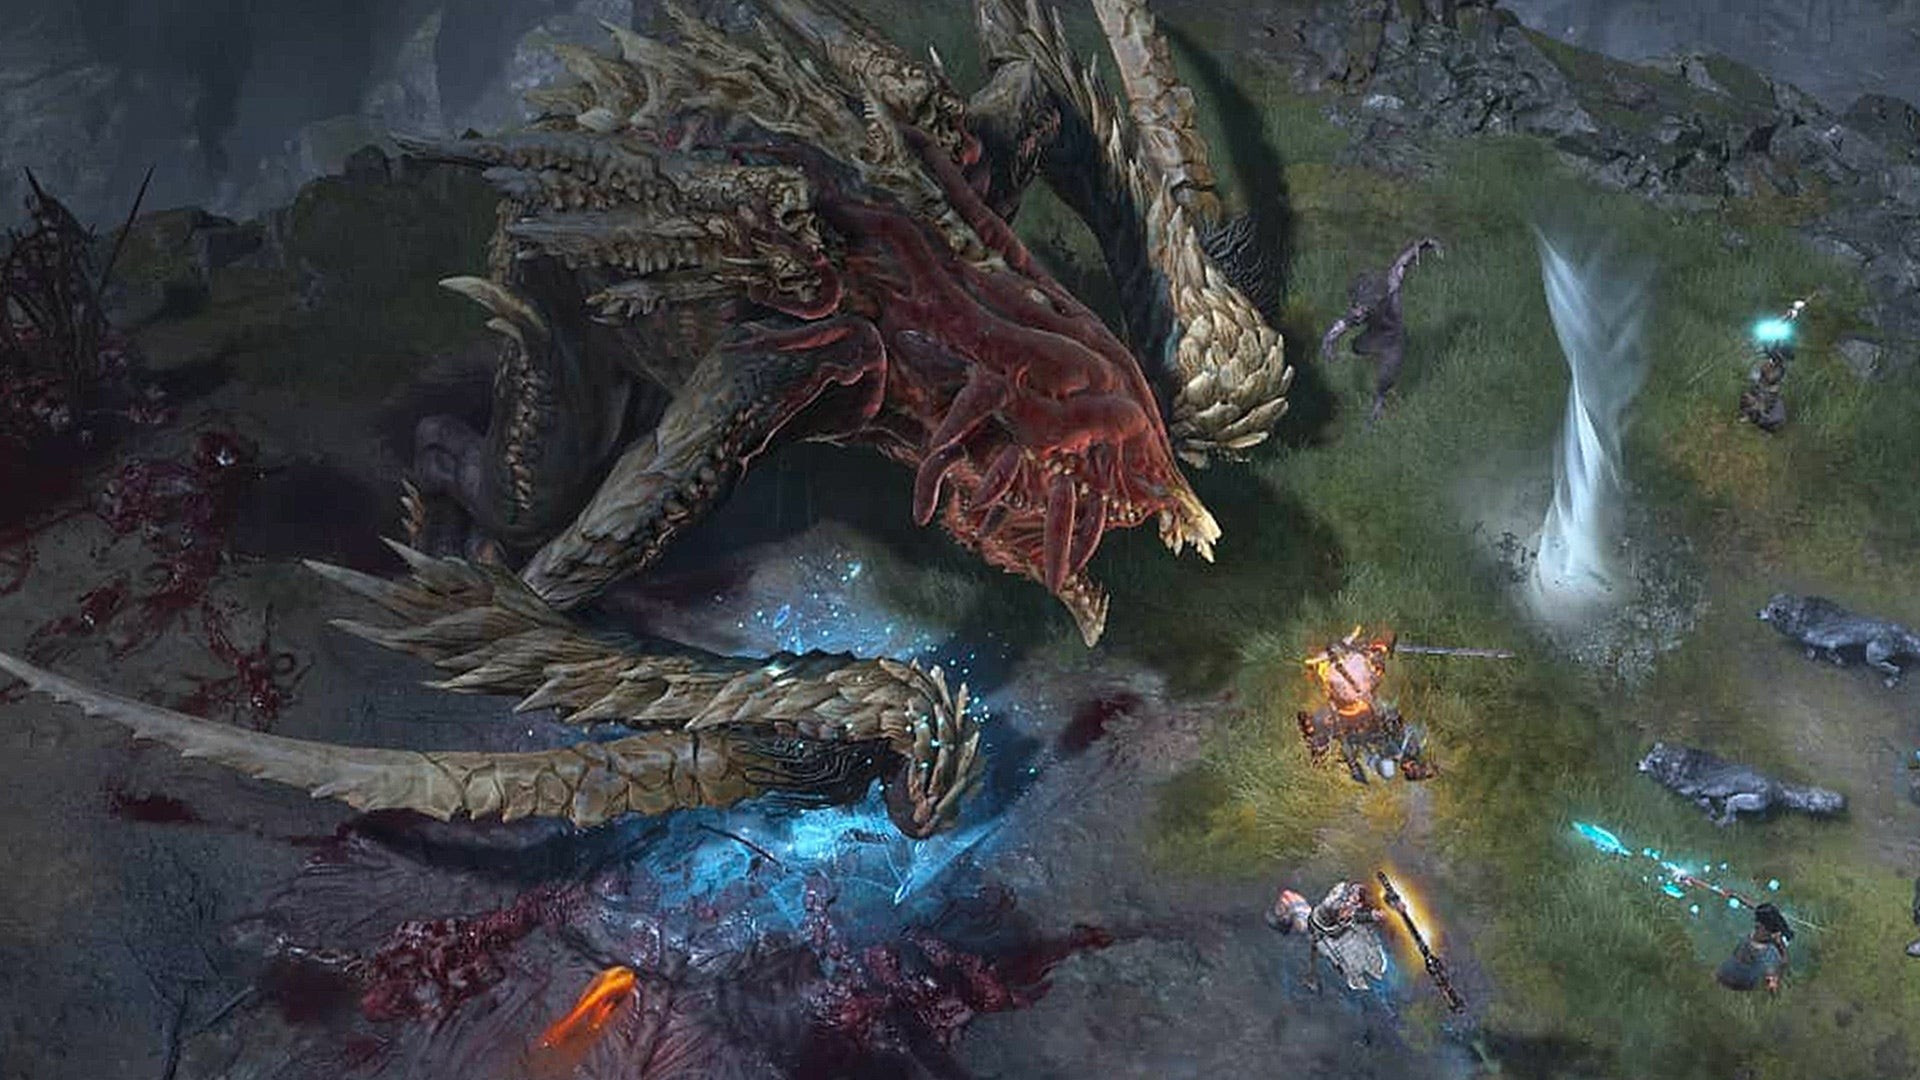 Diablo IV - otwarta beta